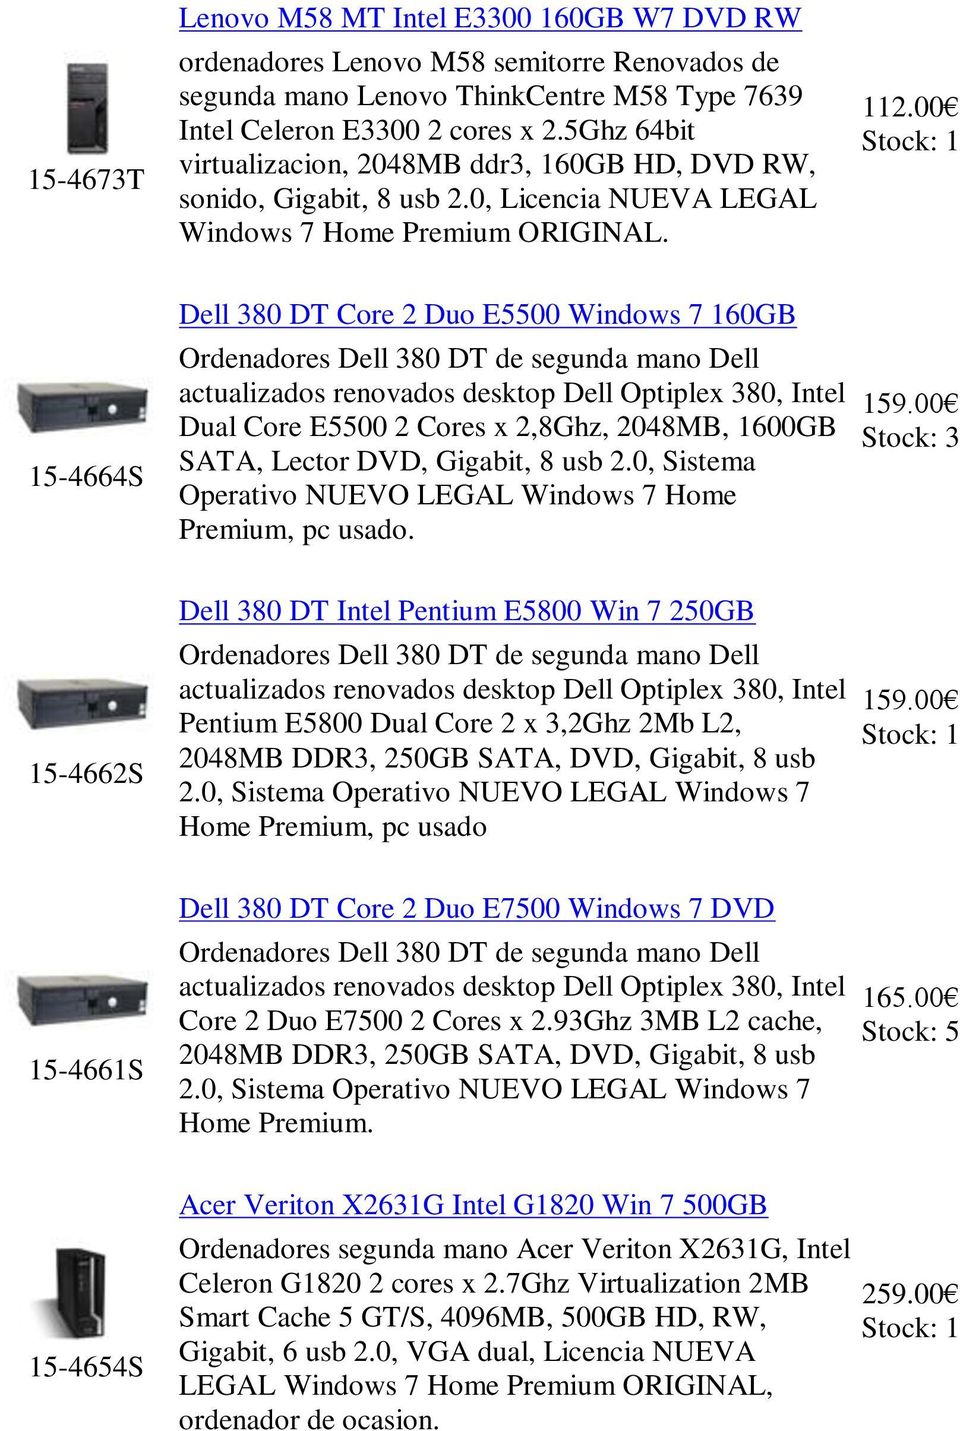 00 15-4664S Dell 380 DT Core 2 Duo E5500 Windows 7 160GB Ordenadores Dell 380 DT de segunda mano Dell actualizados renovados desktop Dell Optiplex 380, Intel Dual Core E5500 2 Cores x 2,8Ghz, 2048MB,